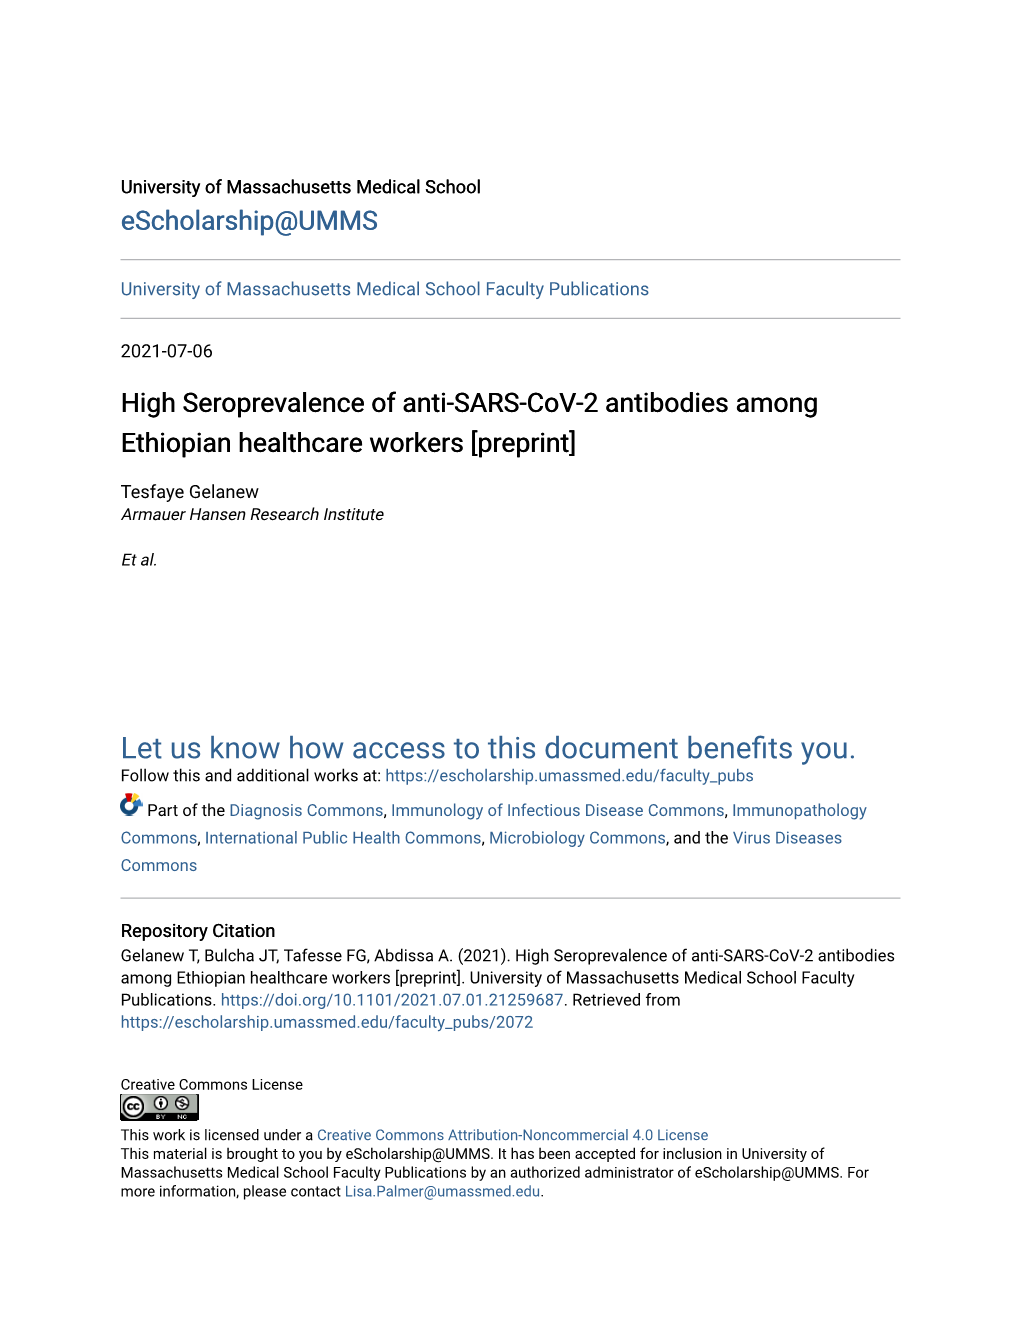 High Seroprevalence of Anti-SARS-Cov-2 Antibodies Among Ethiopian Healthcare Workers [Preprint]